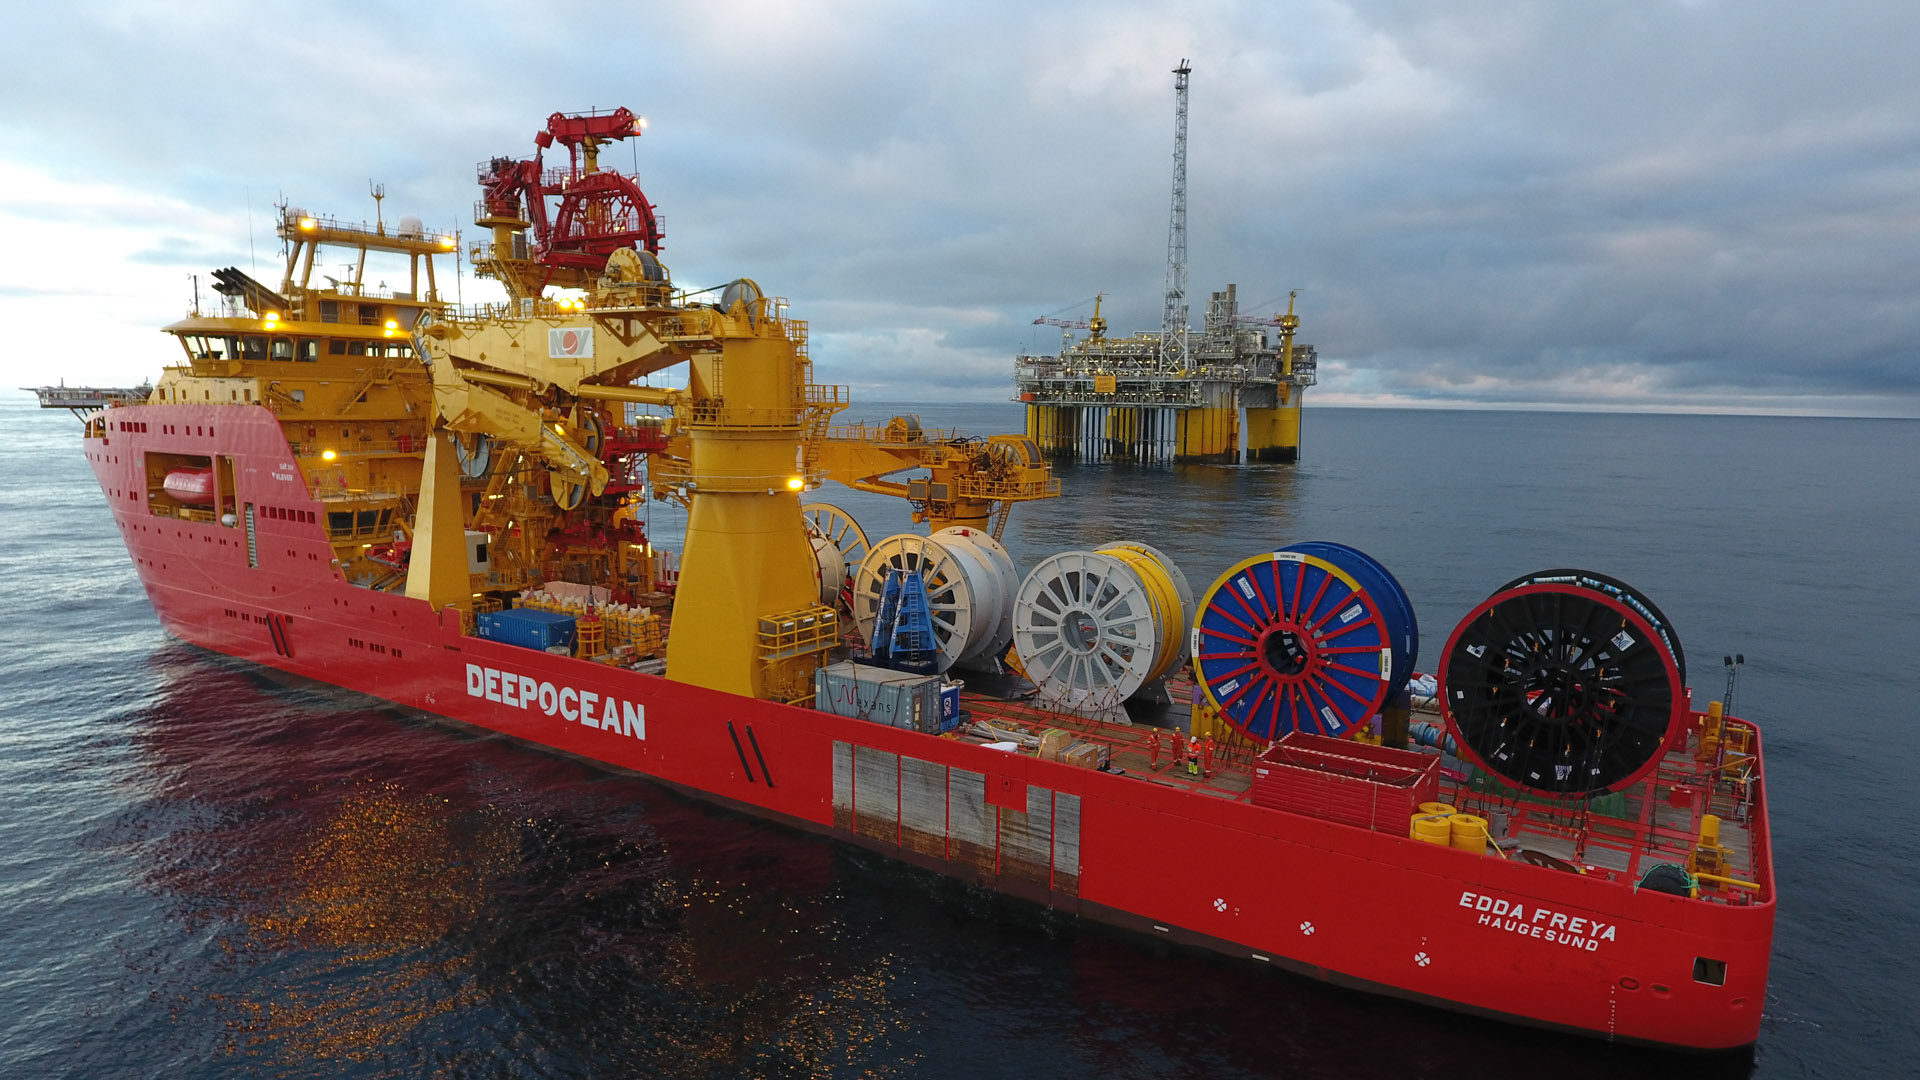 vehicles, offshore support vessel, deepocean edda freya, ship